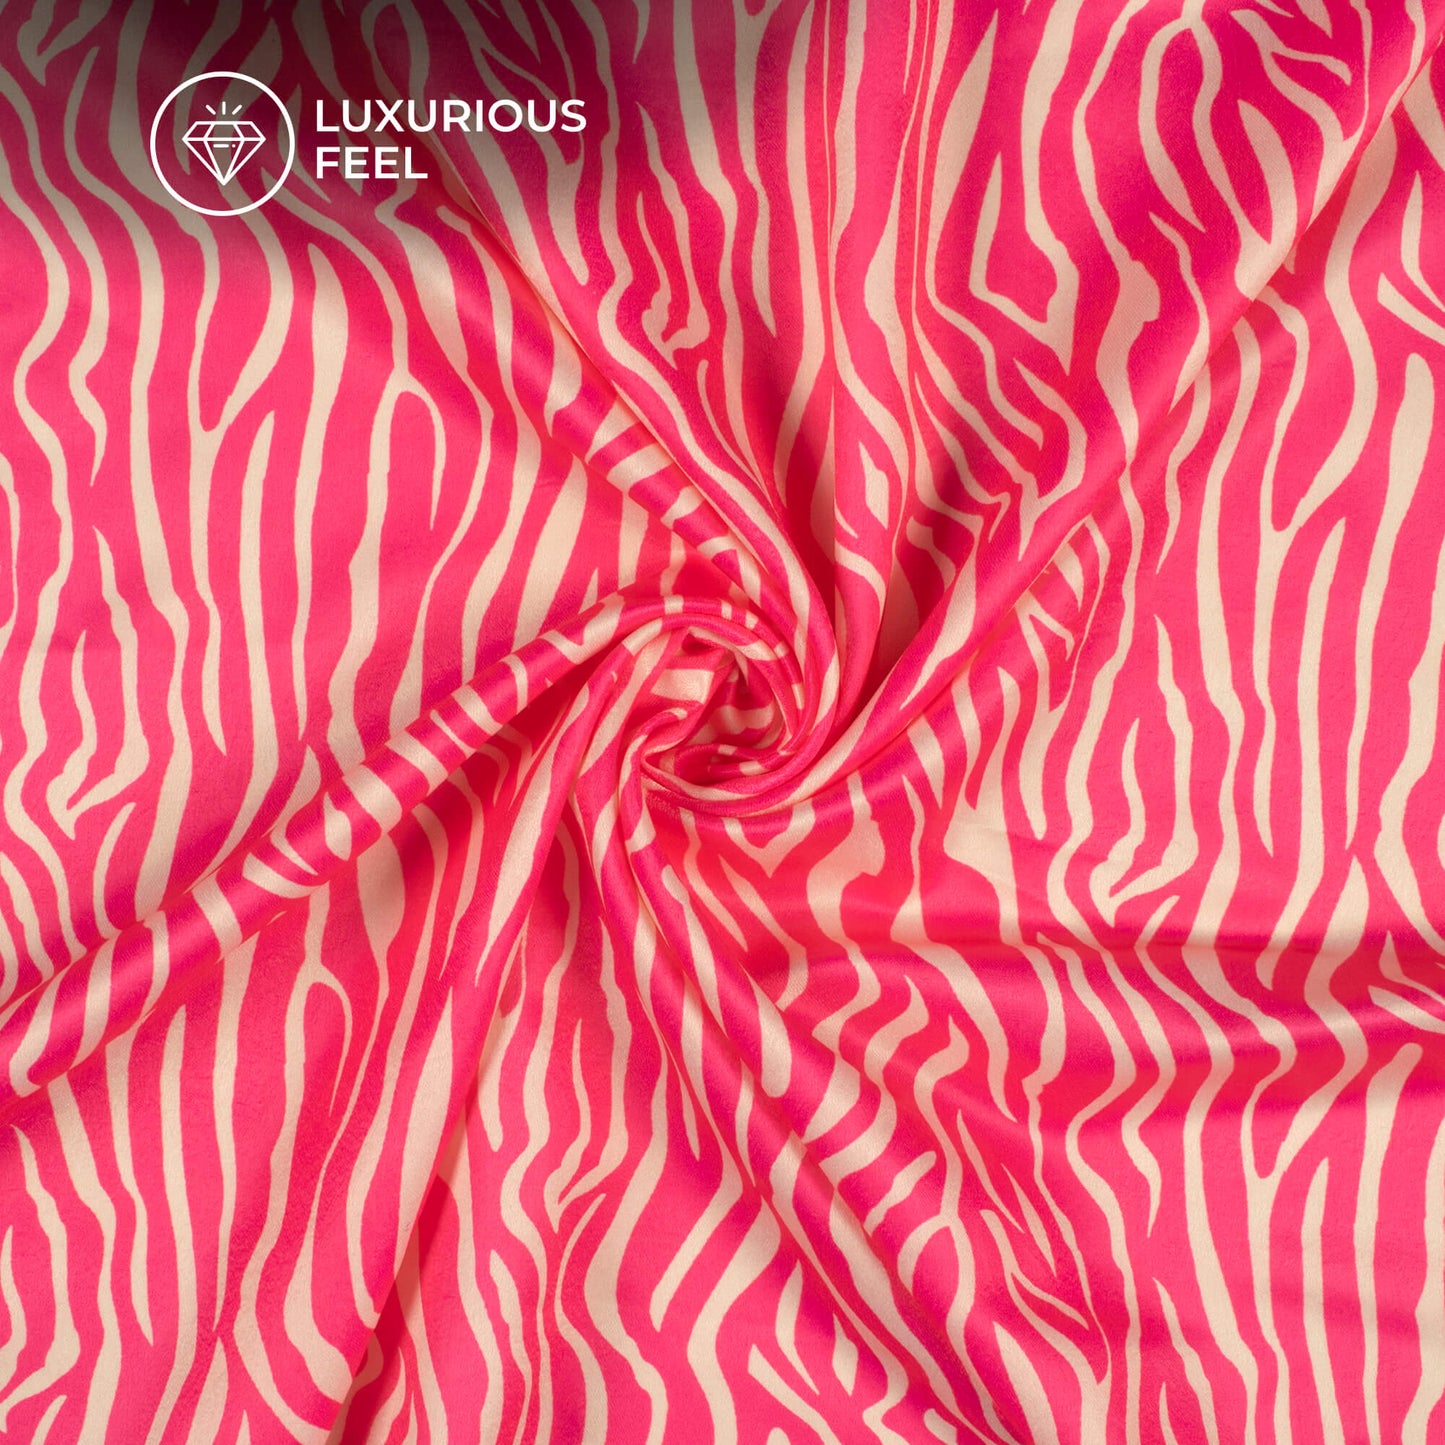 Lavish Pink Zebra Digital Print Lush Satin Fabric